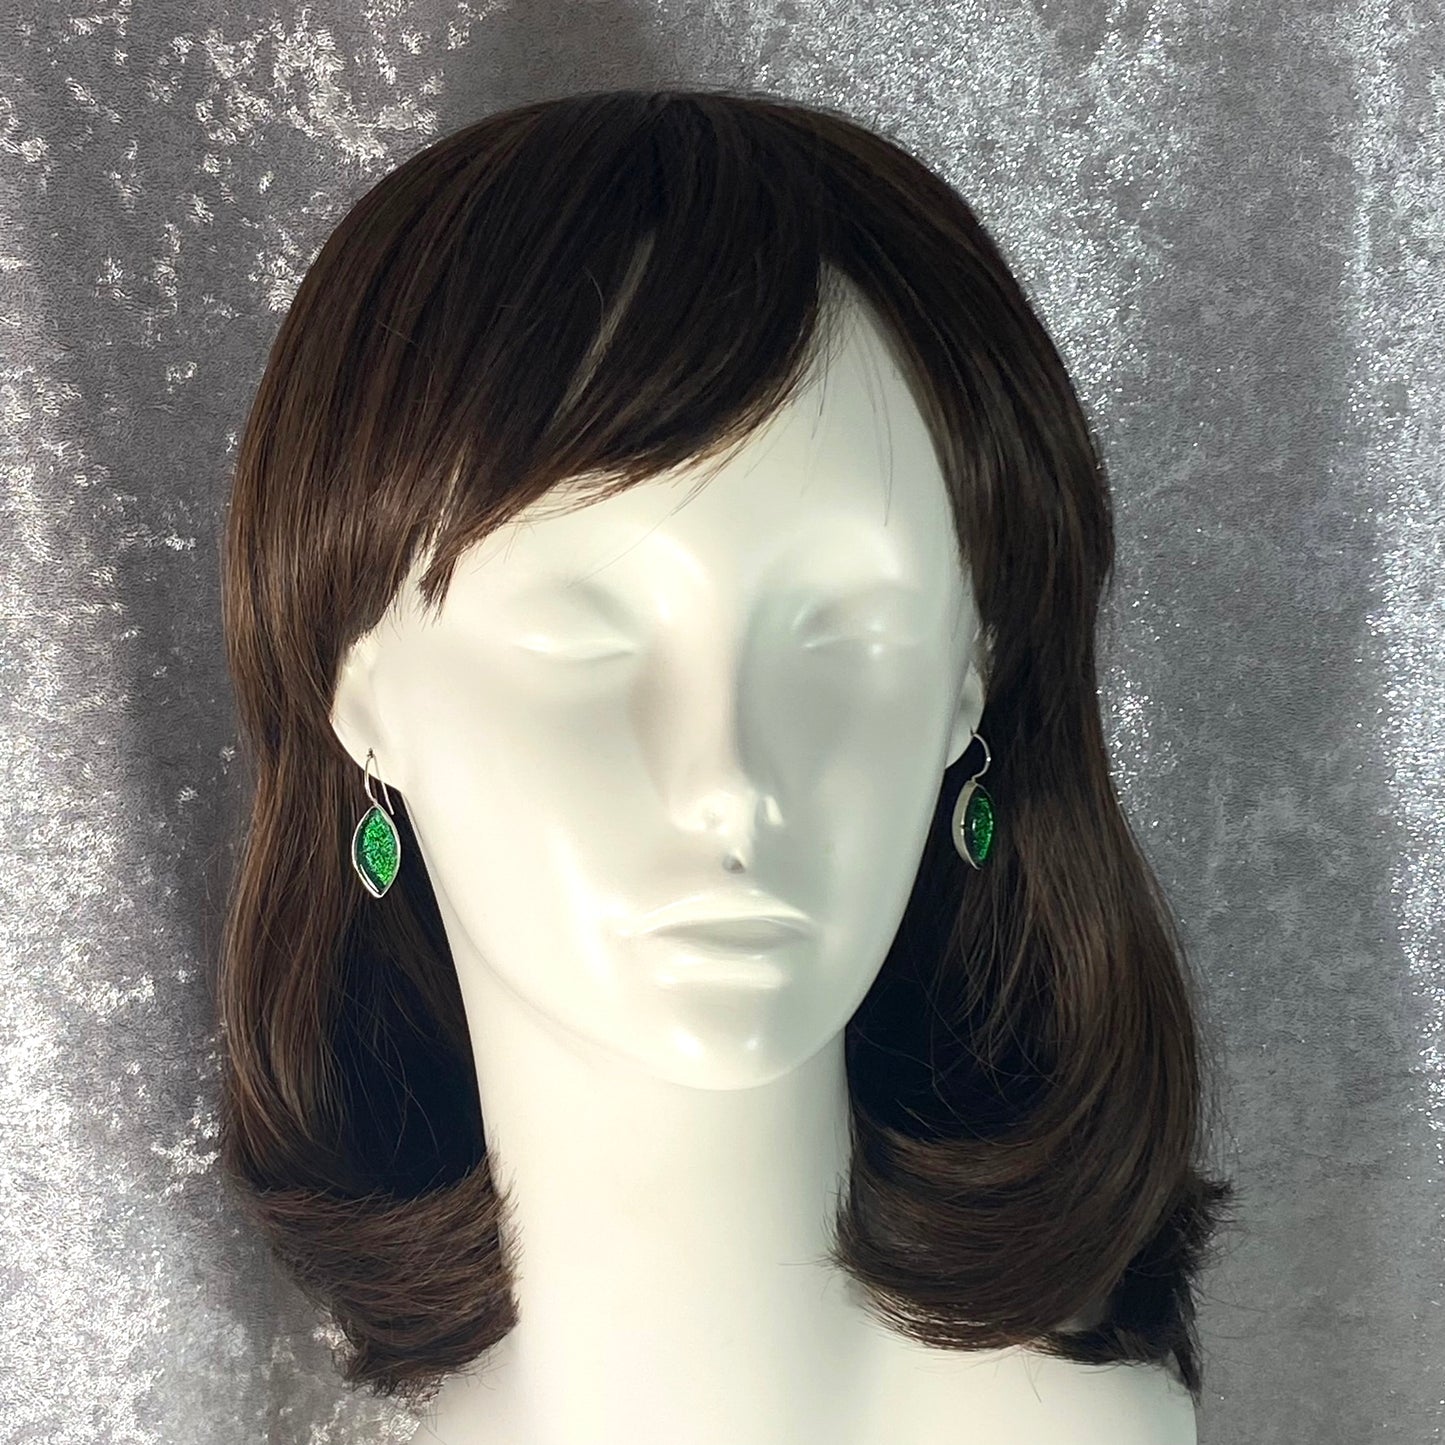 Marquise Earrings in Emerald